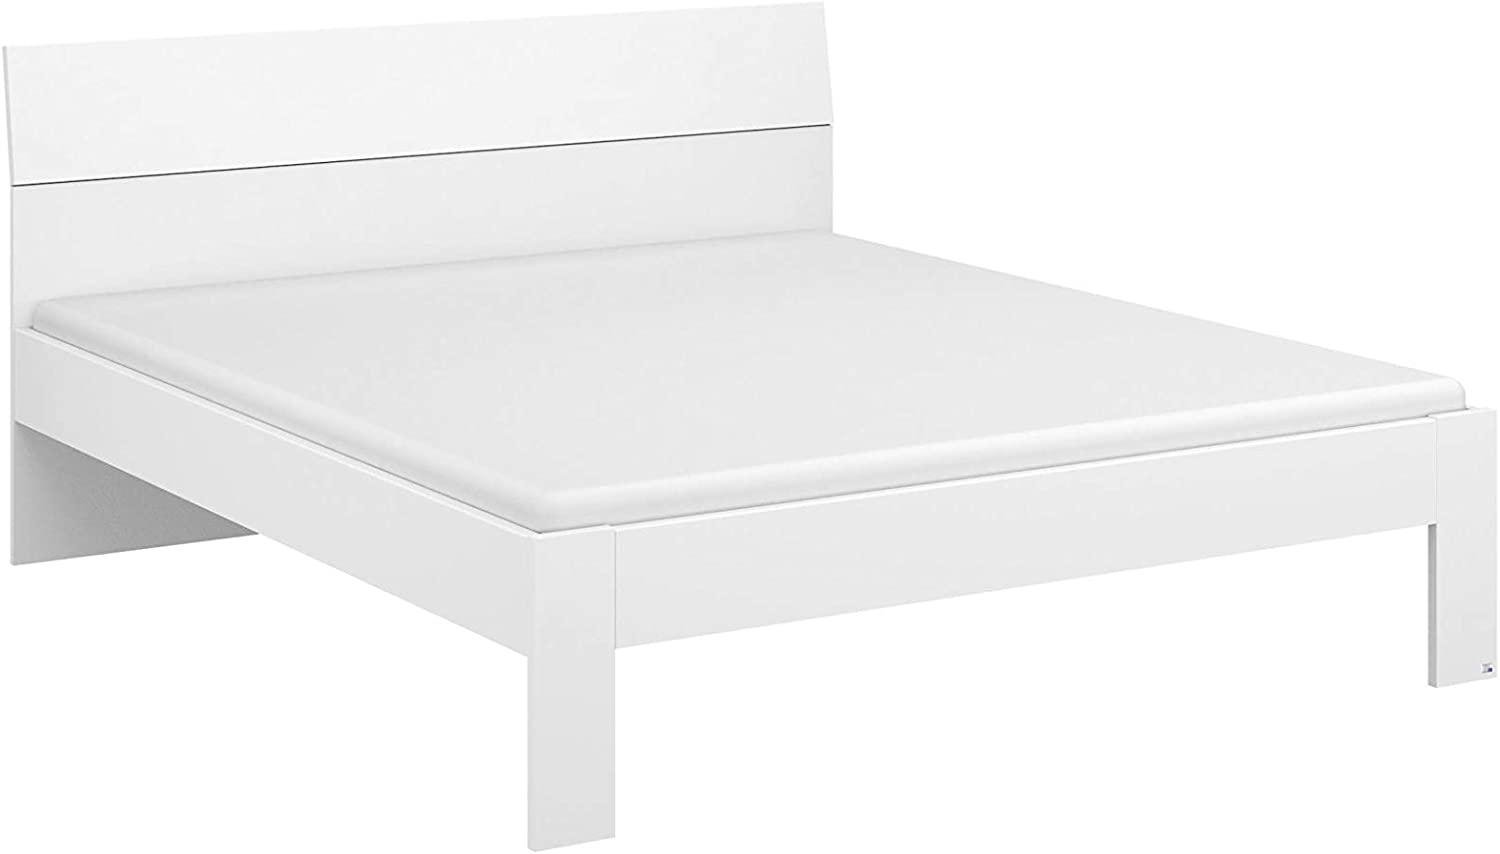 Rauch Möbel Flexx Bett Doppelbett Futonbett in Weiß Liegefläche 180 x 200 cm Gesamtmaße Bett BxHxT 185 x 90 x 209 cm Bild 1